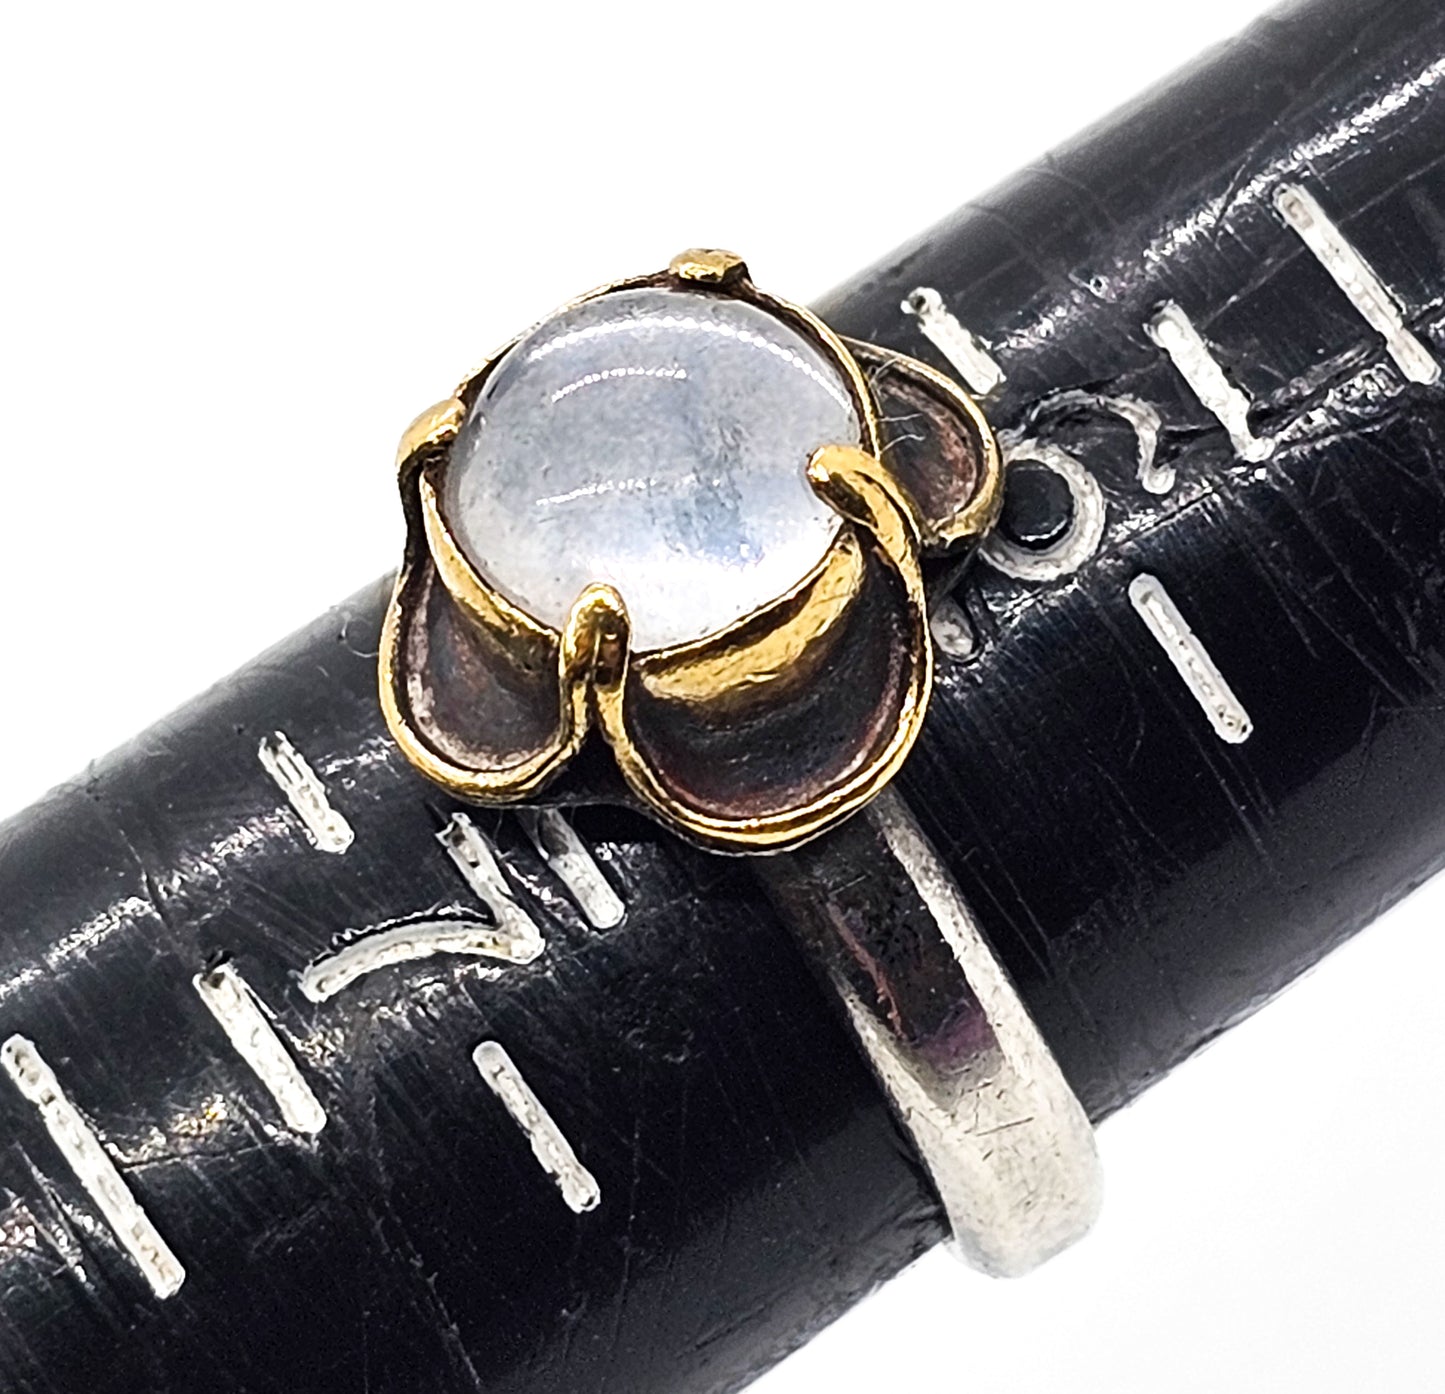 Star Quartz Chatoyant gemstone gold over sterling silver vintage ring size 6.5